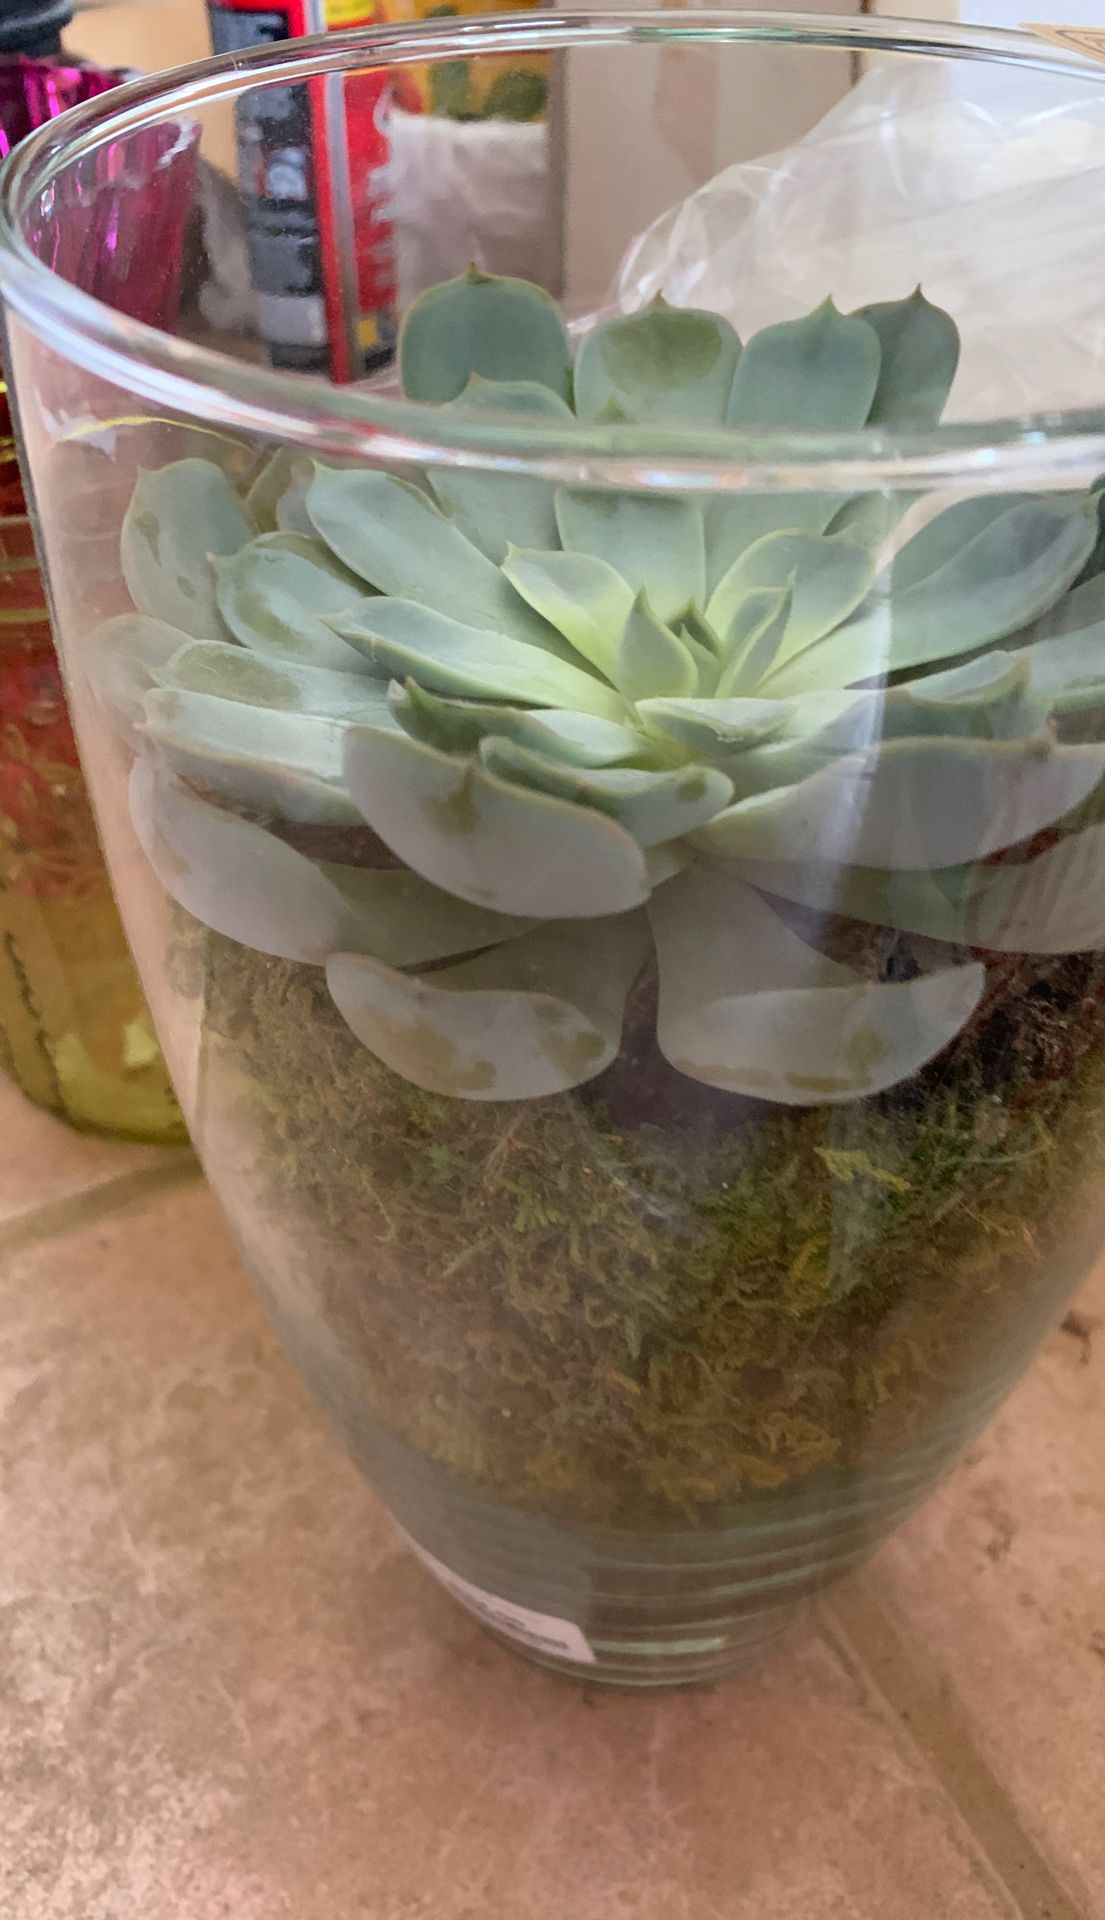 Echeveria 'Orion' succulent in glass vase